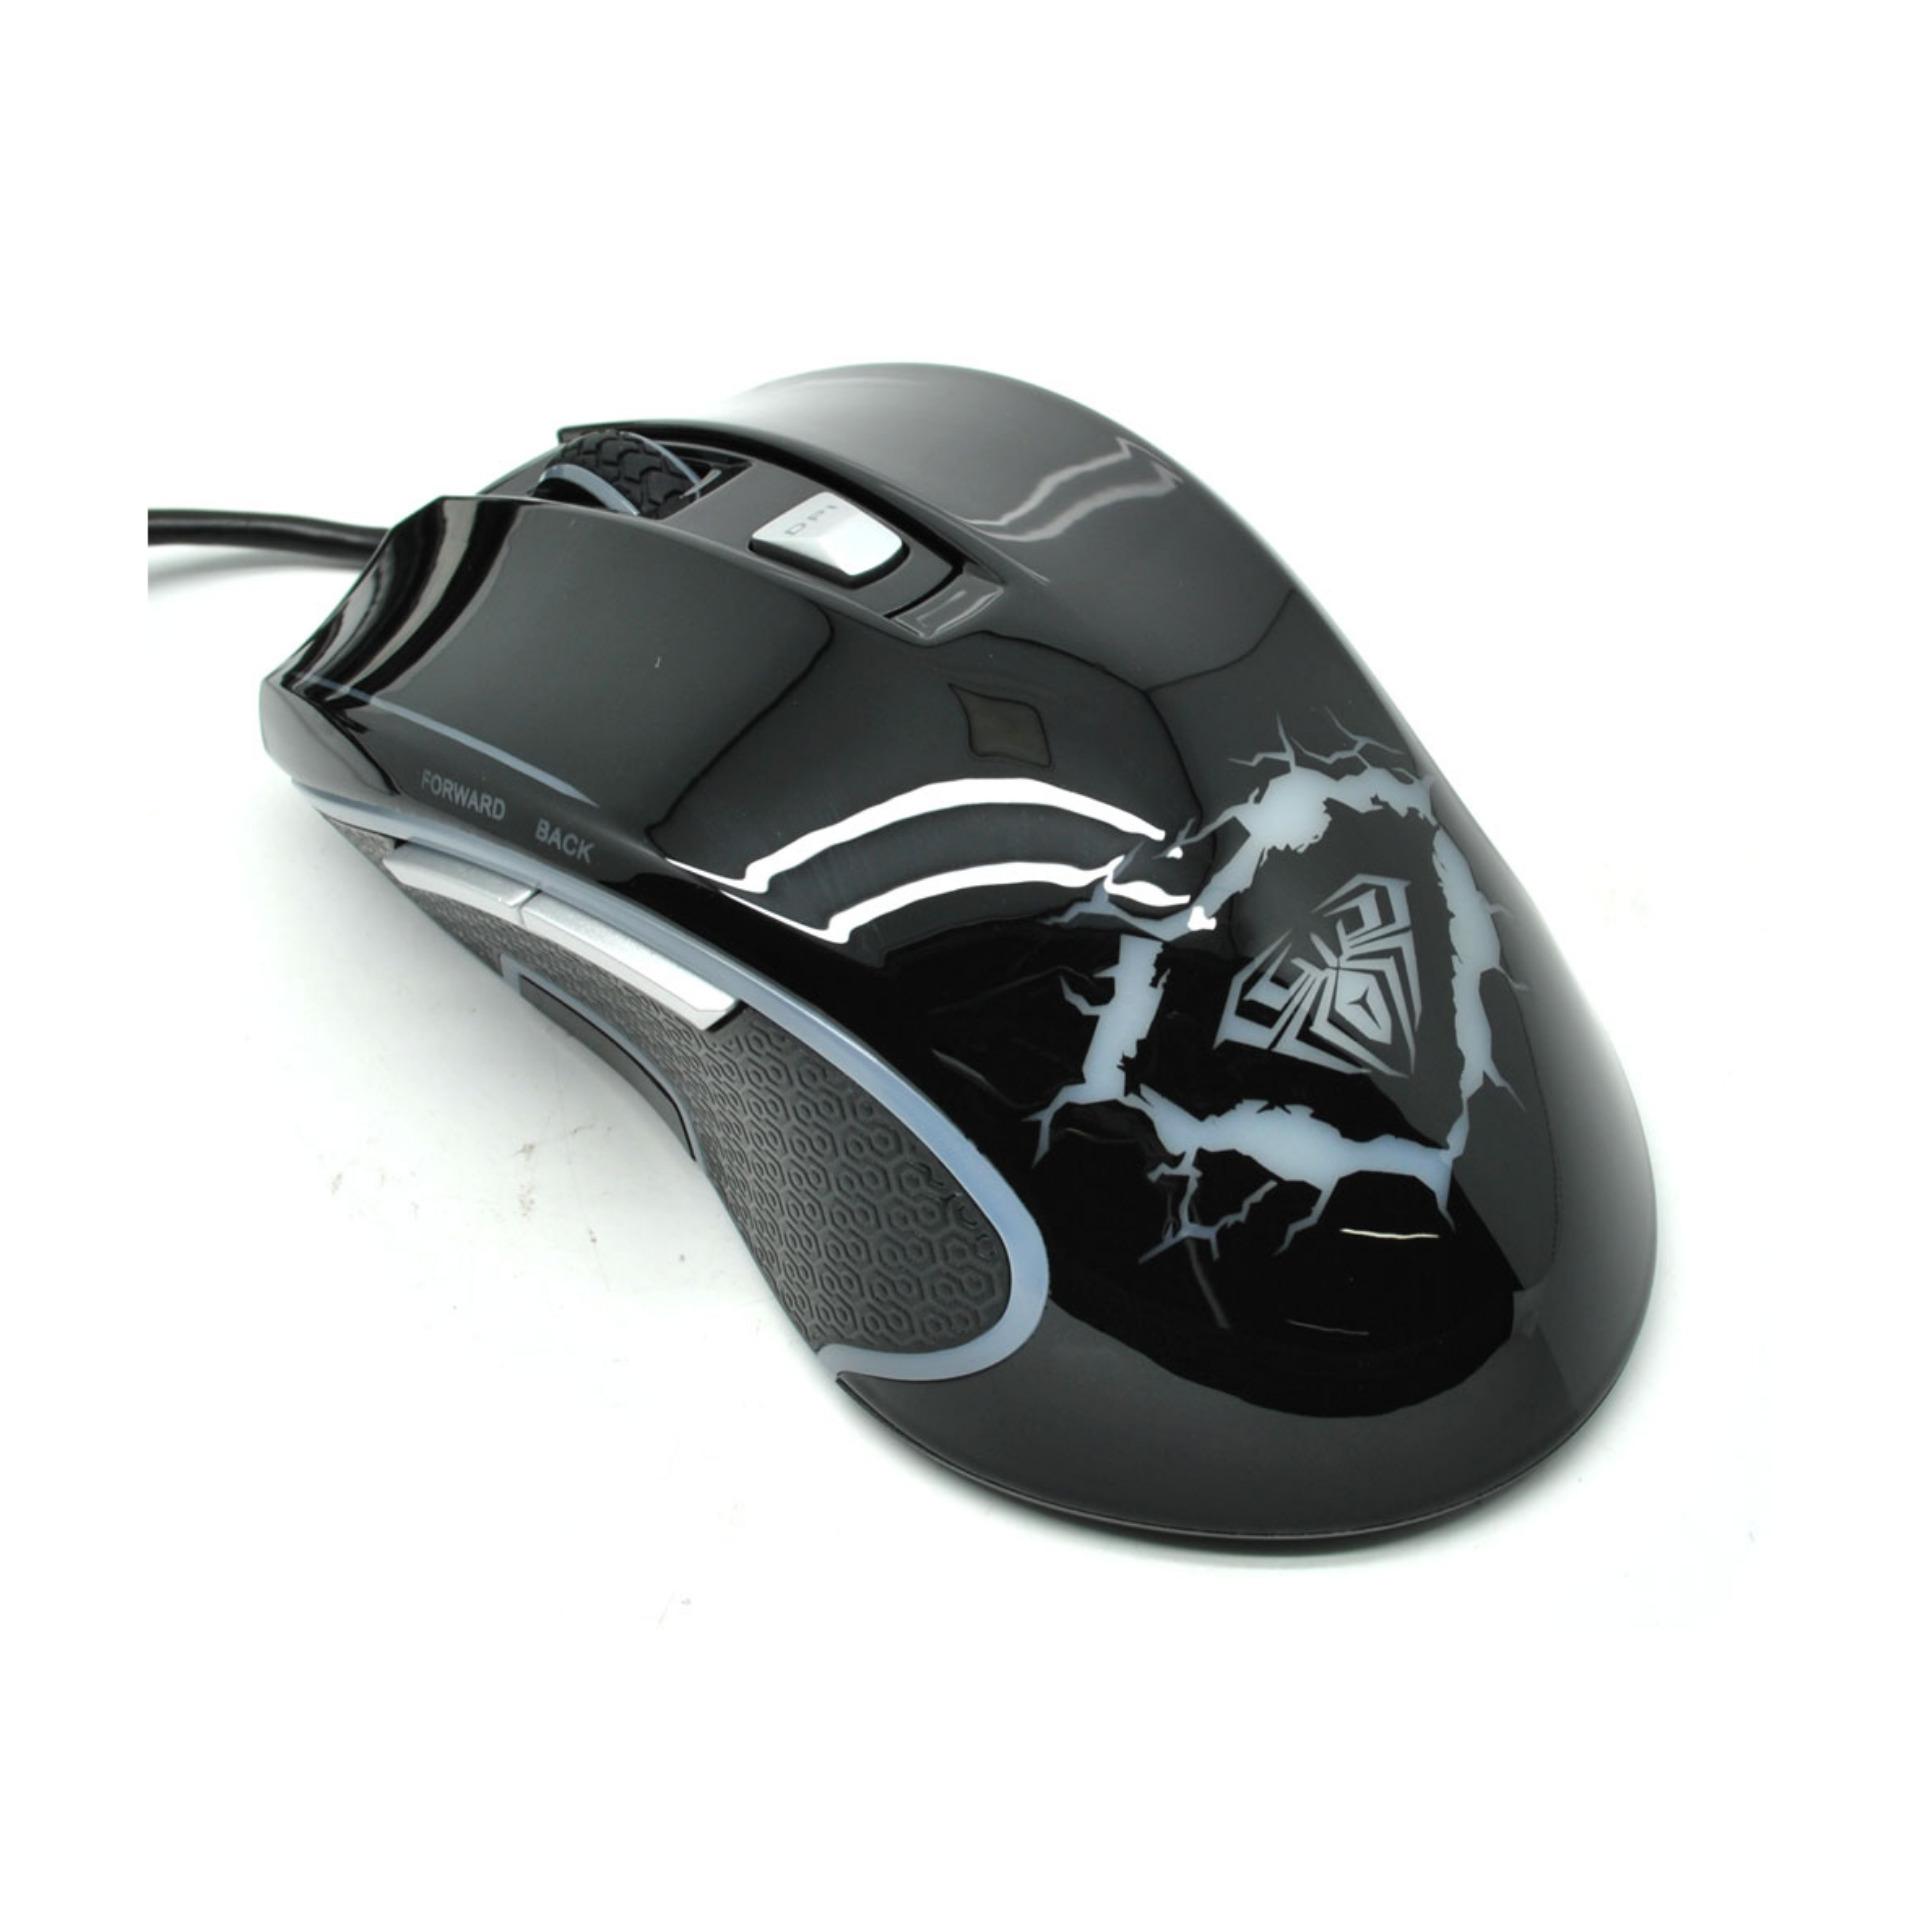 Aula Sanction Gaming Mouse 3500 DPI - Black